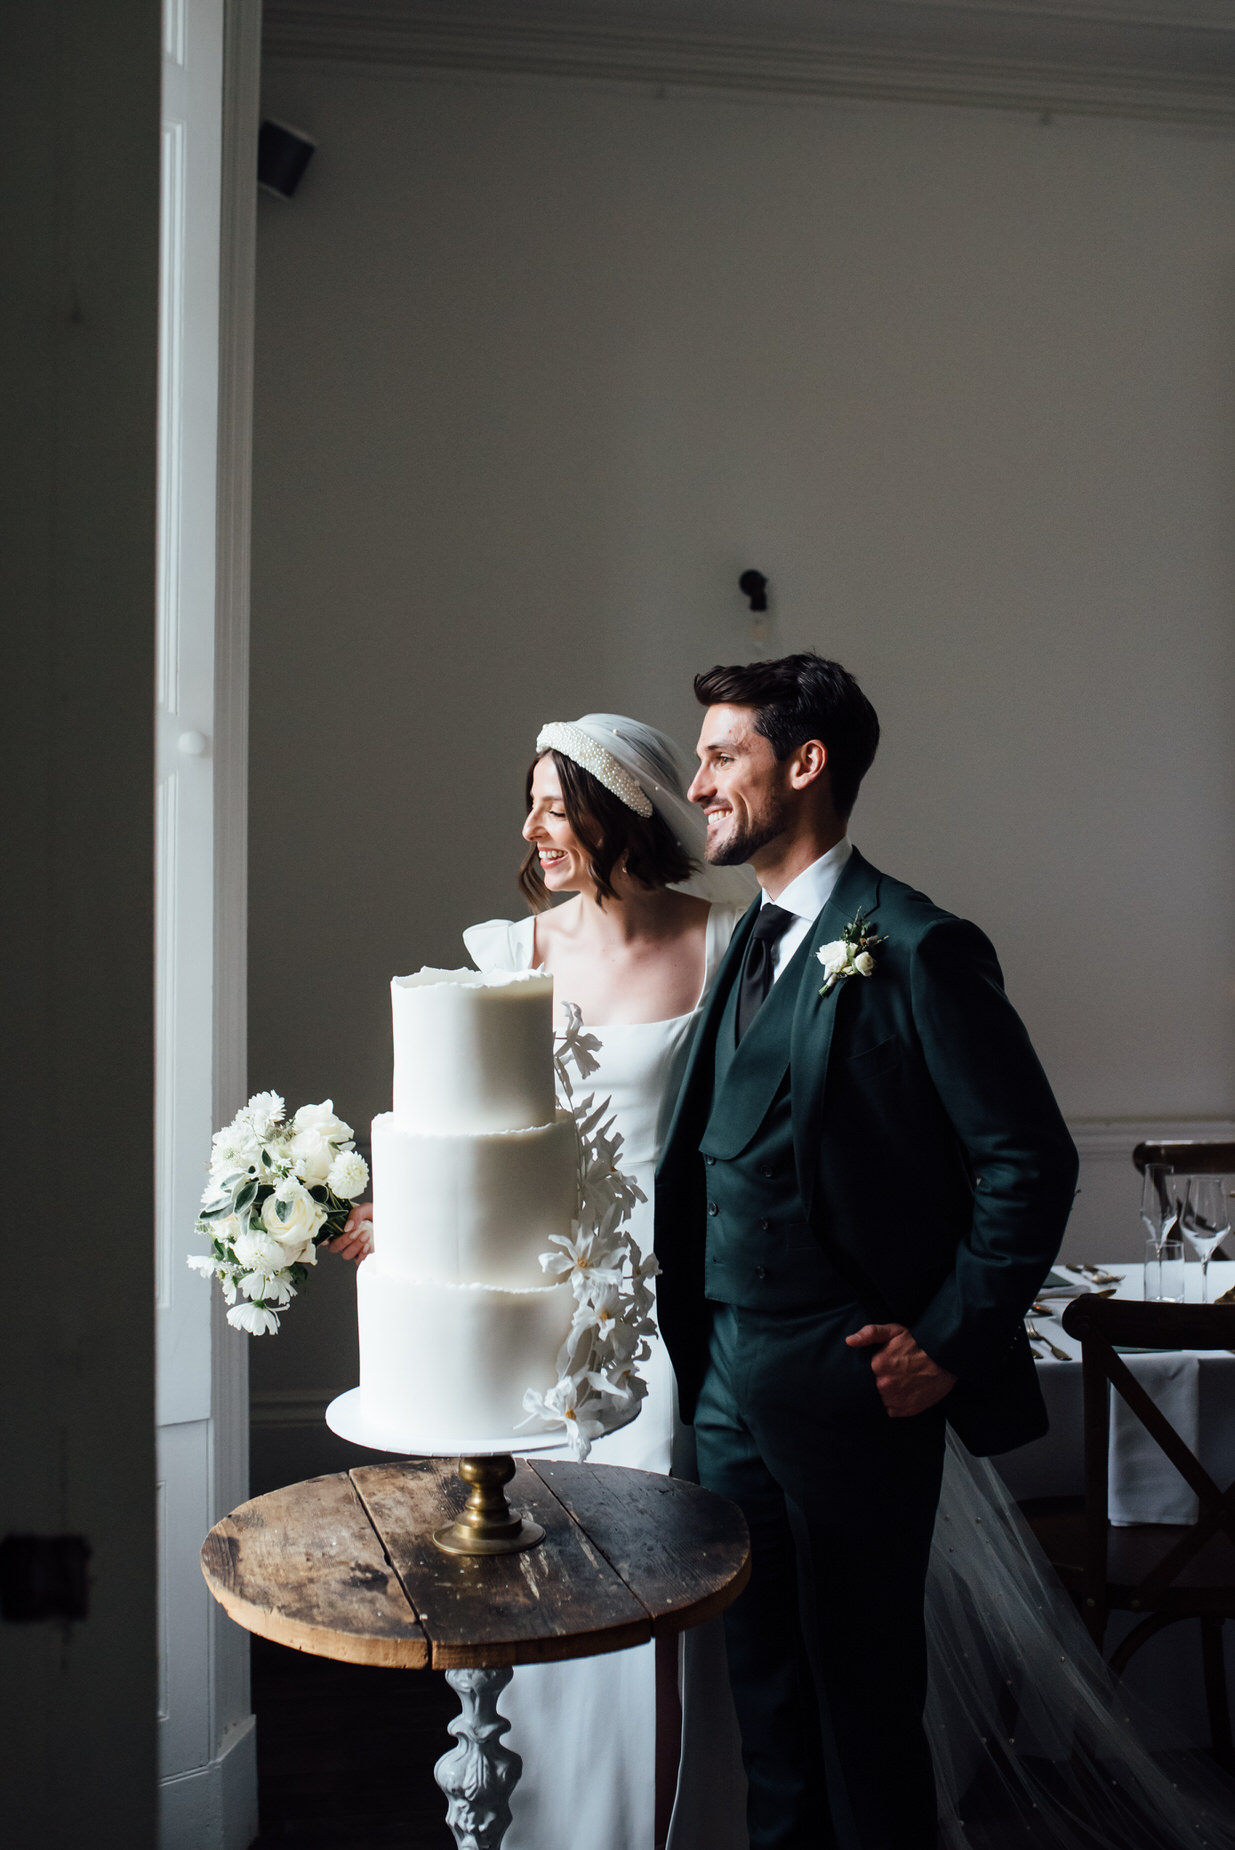 wedding cake, michelle wood photographer, authentic wedding photos, aswarby wedding